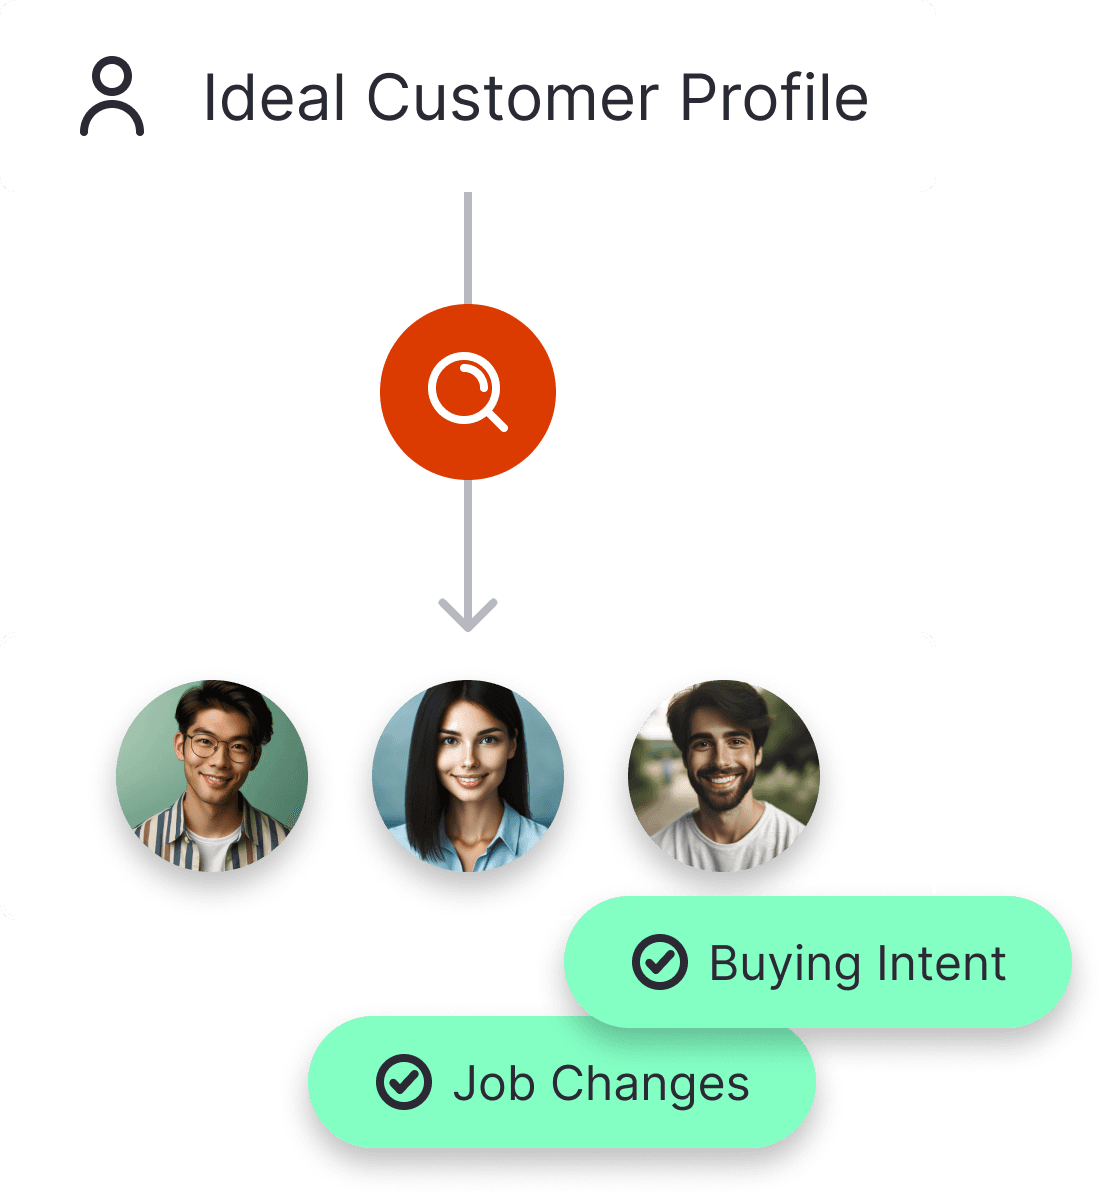 Identify ideal customer profiles